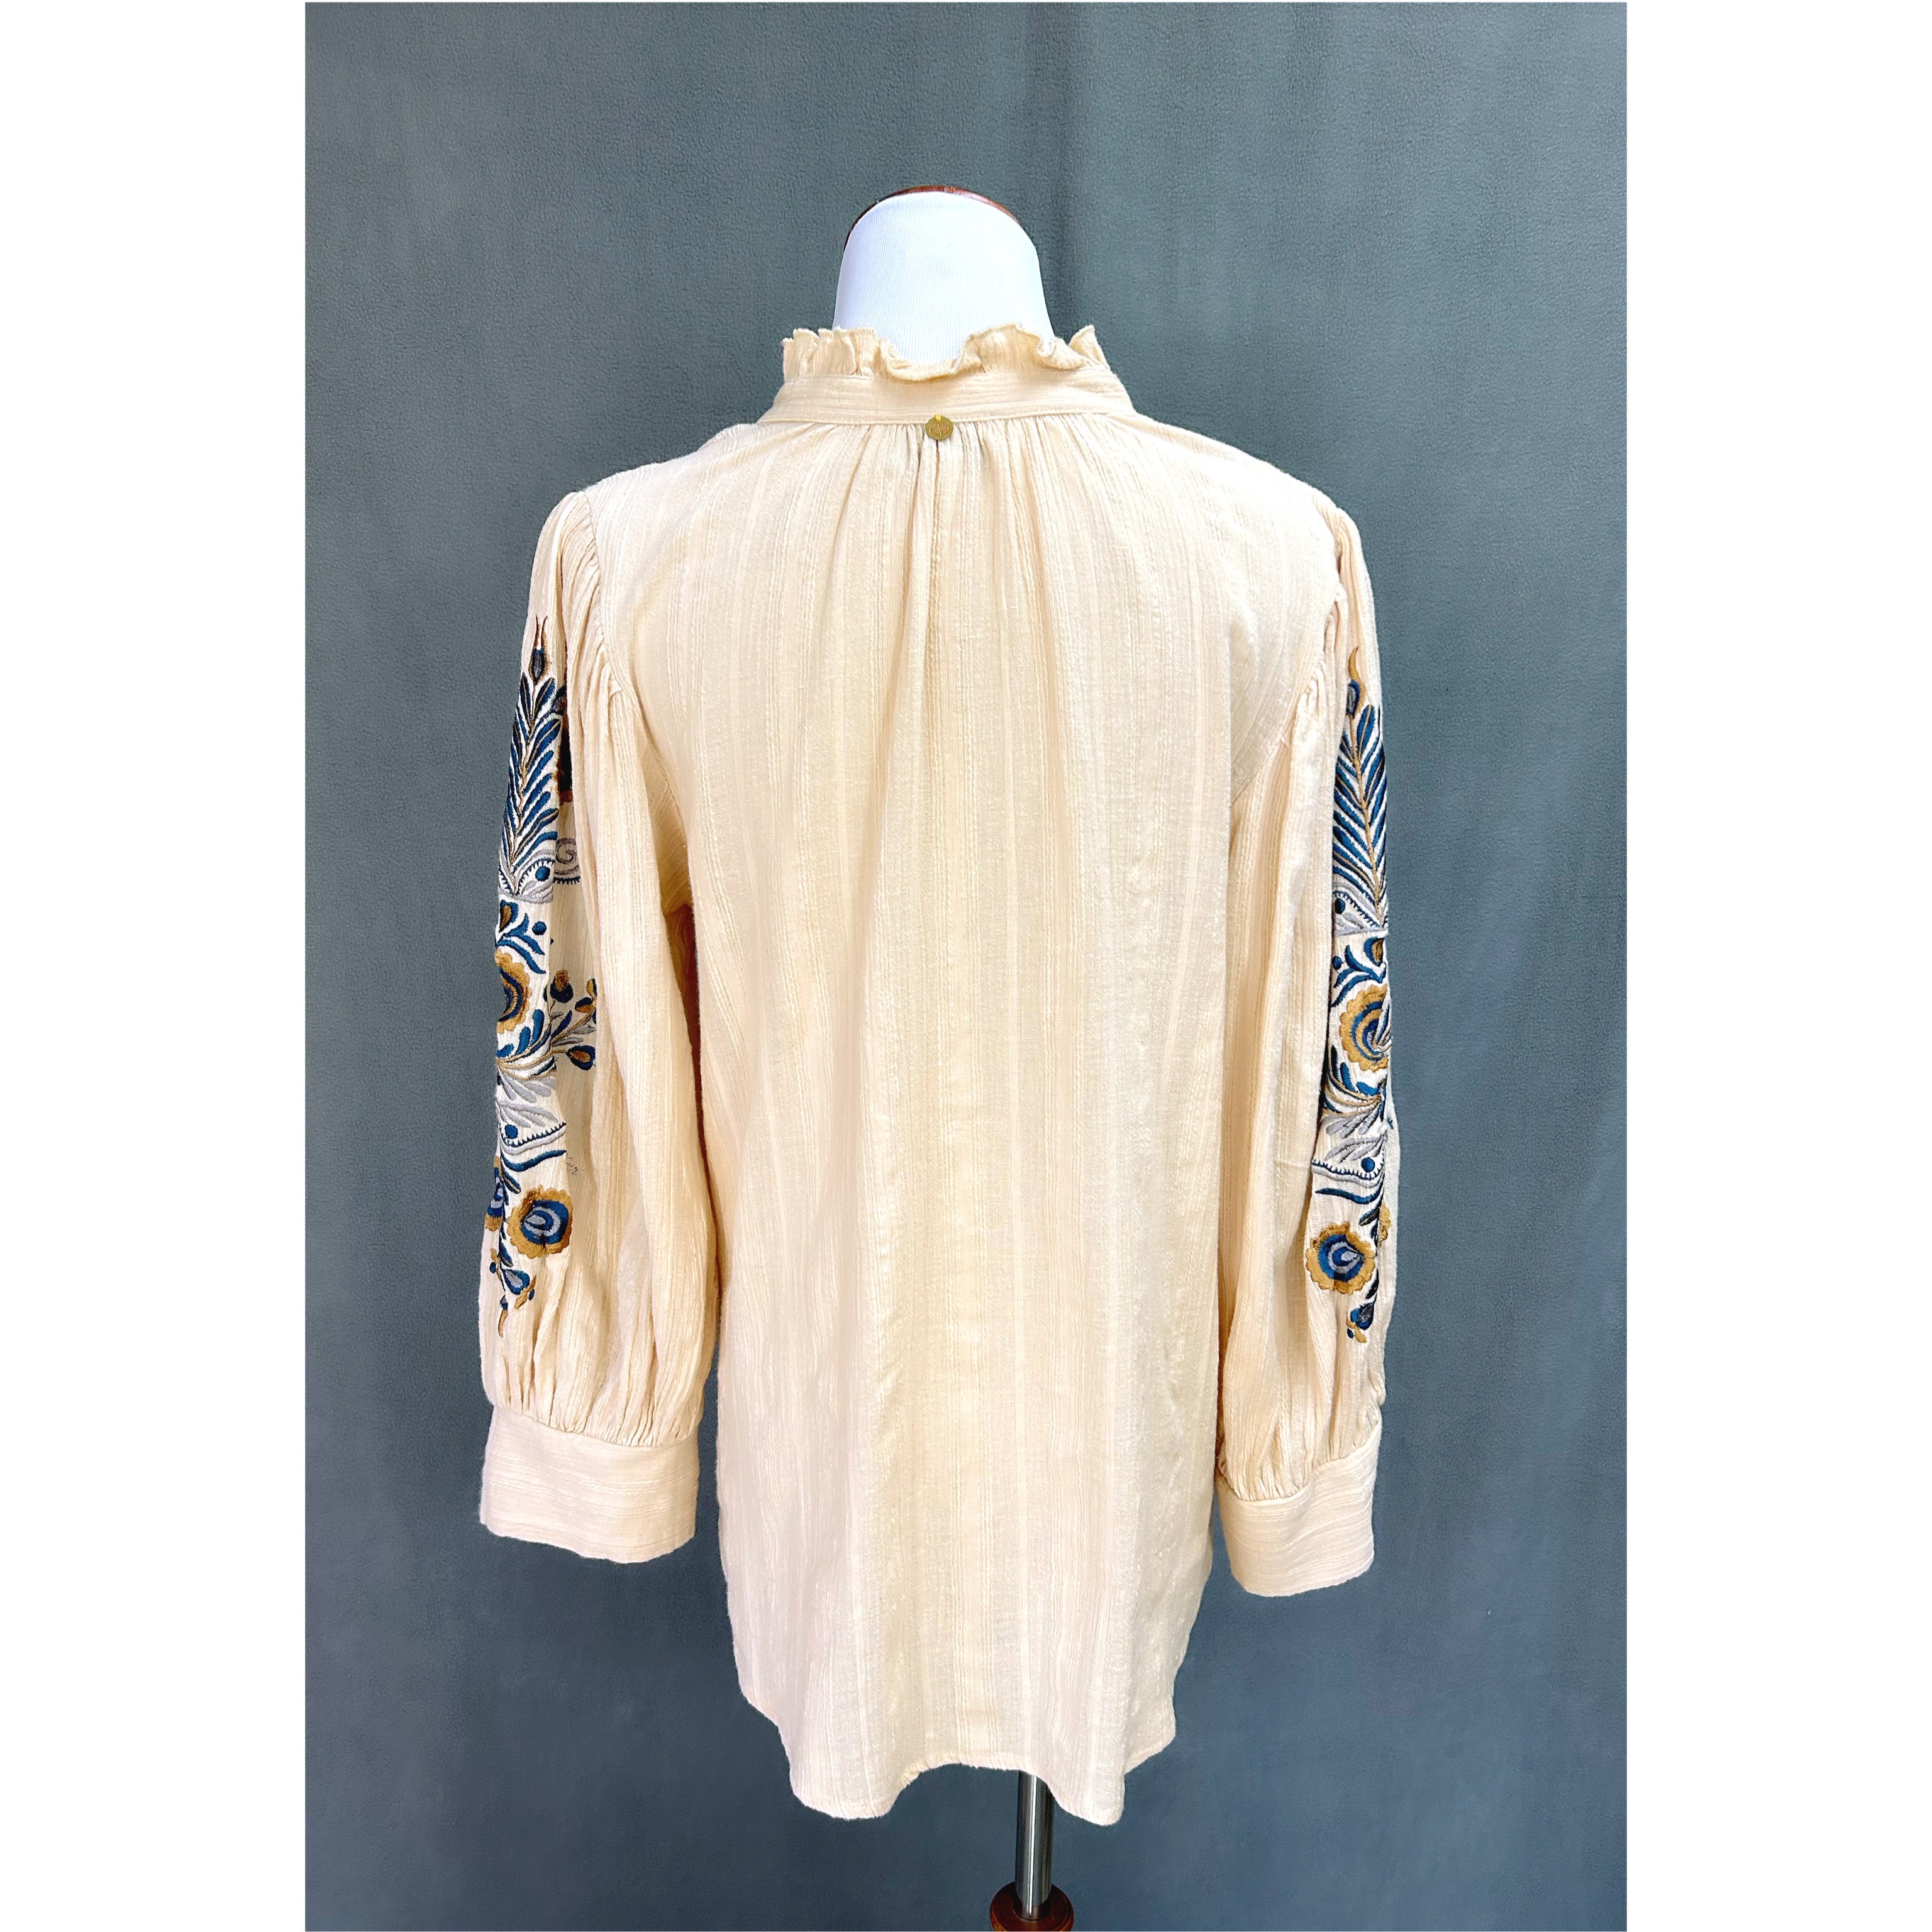 Antik Batik embroidered blouse, size S